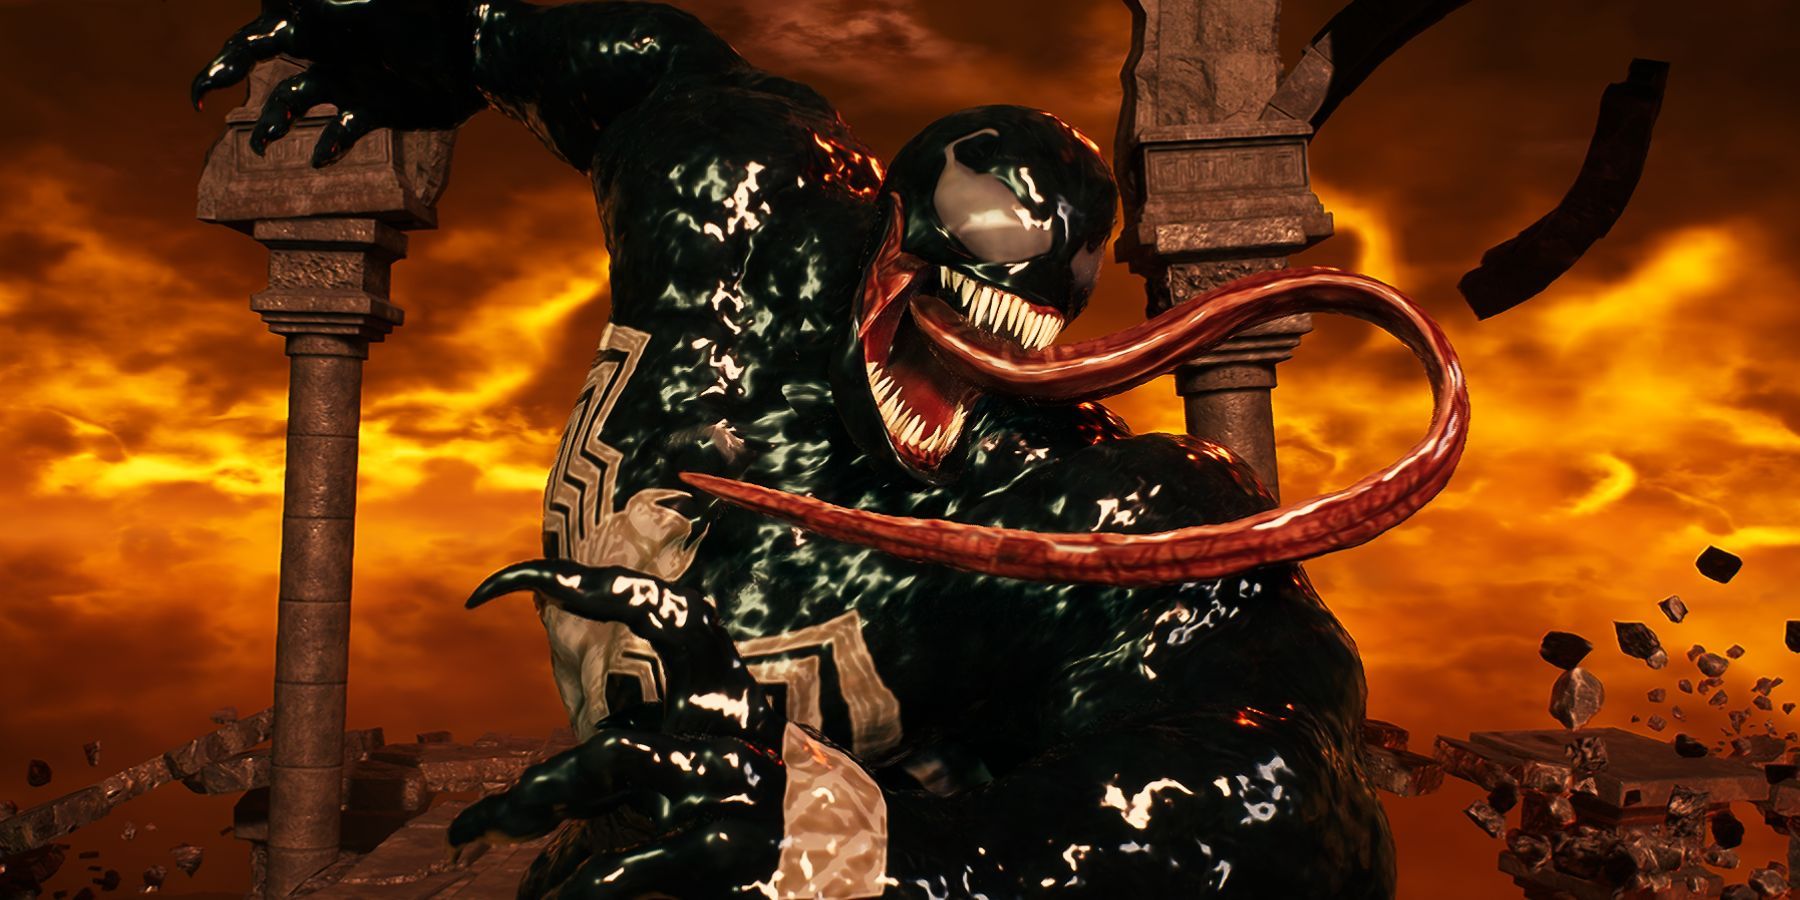 Marvel's Midnight Suns Venom Gameplay Breakdown